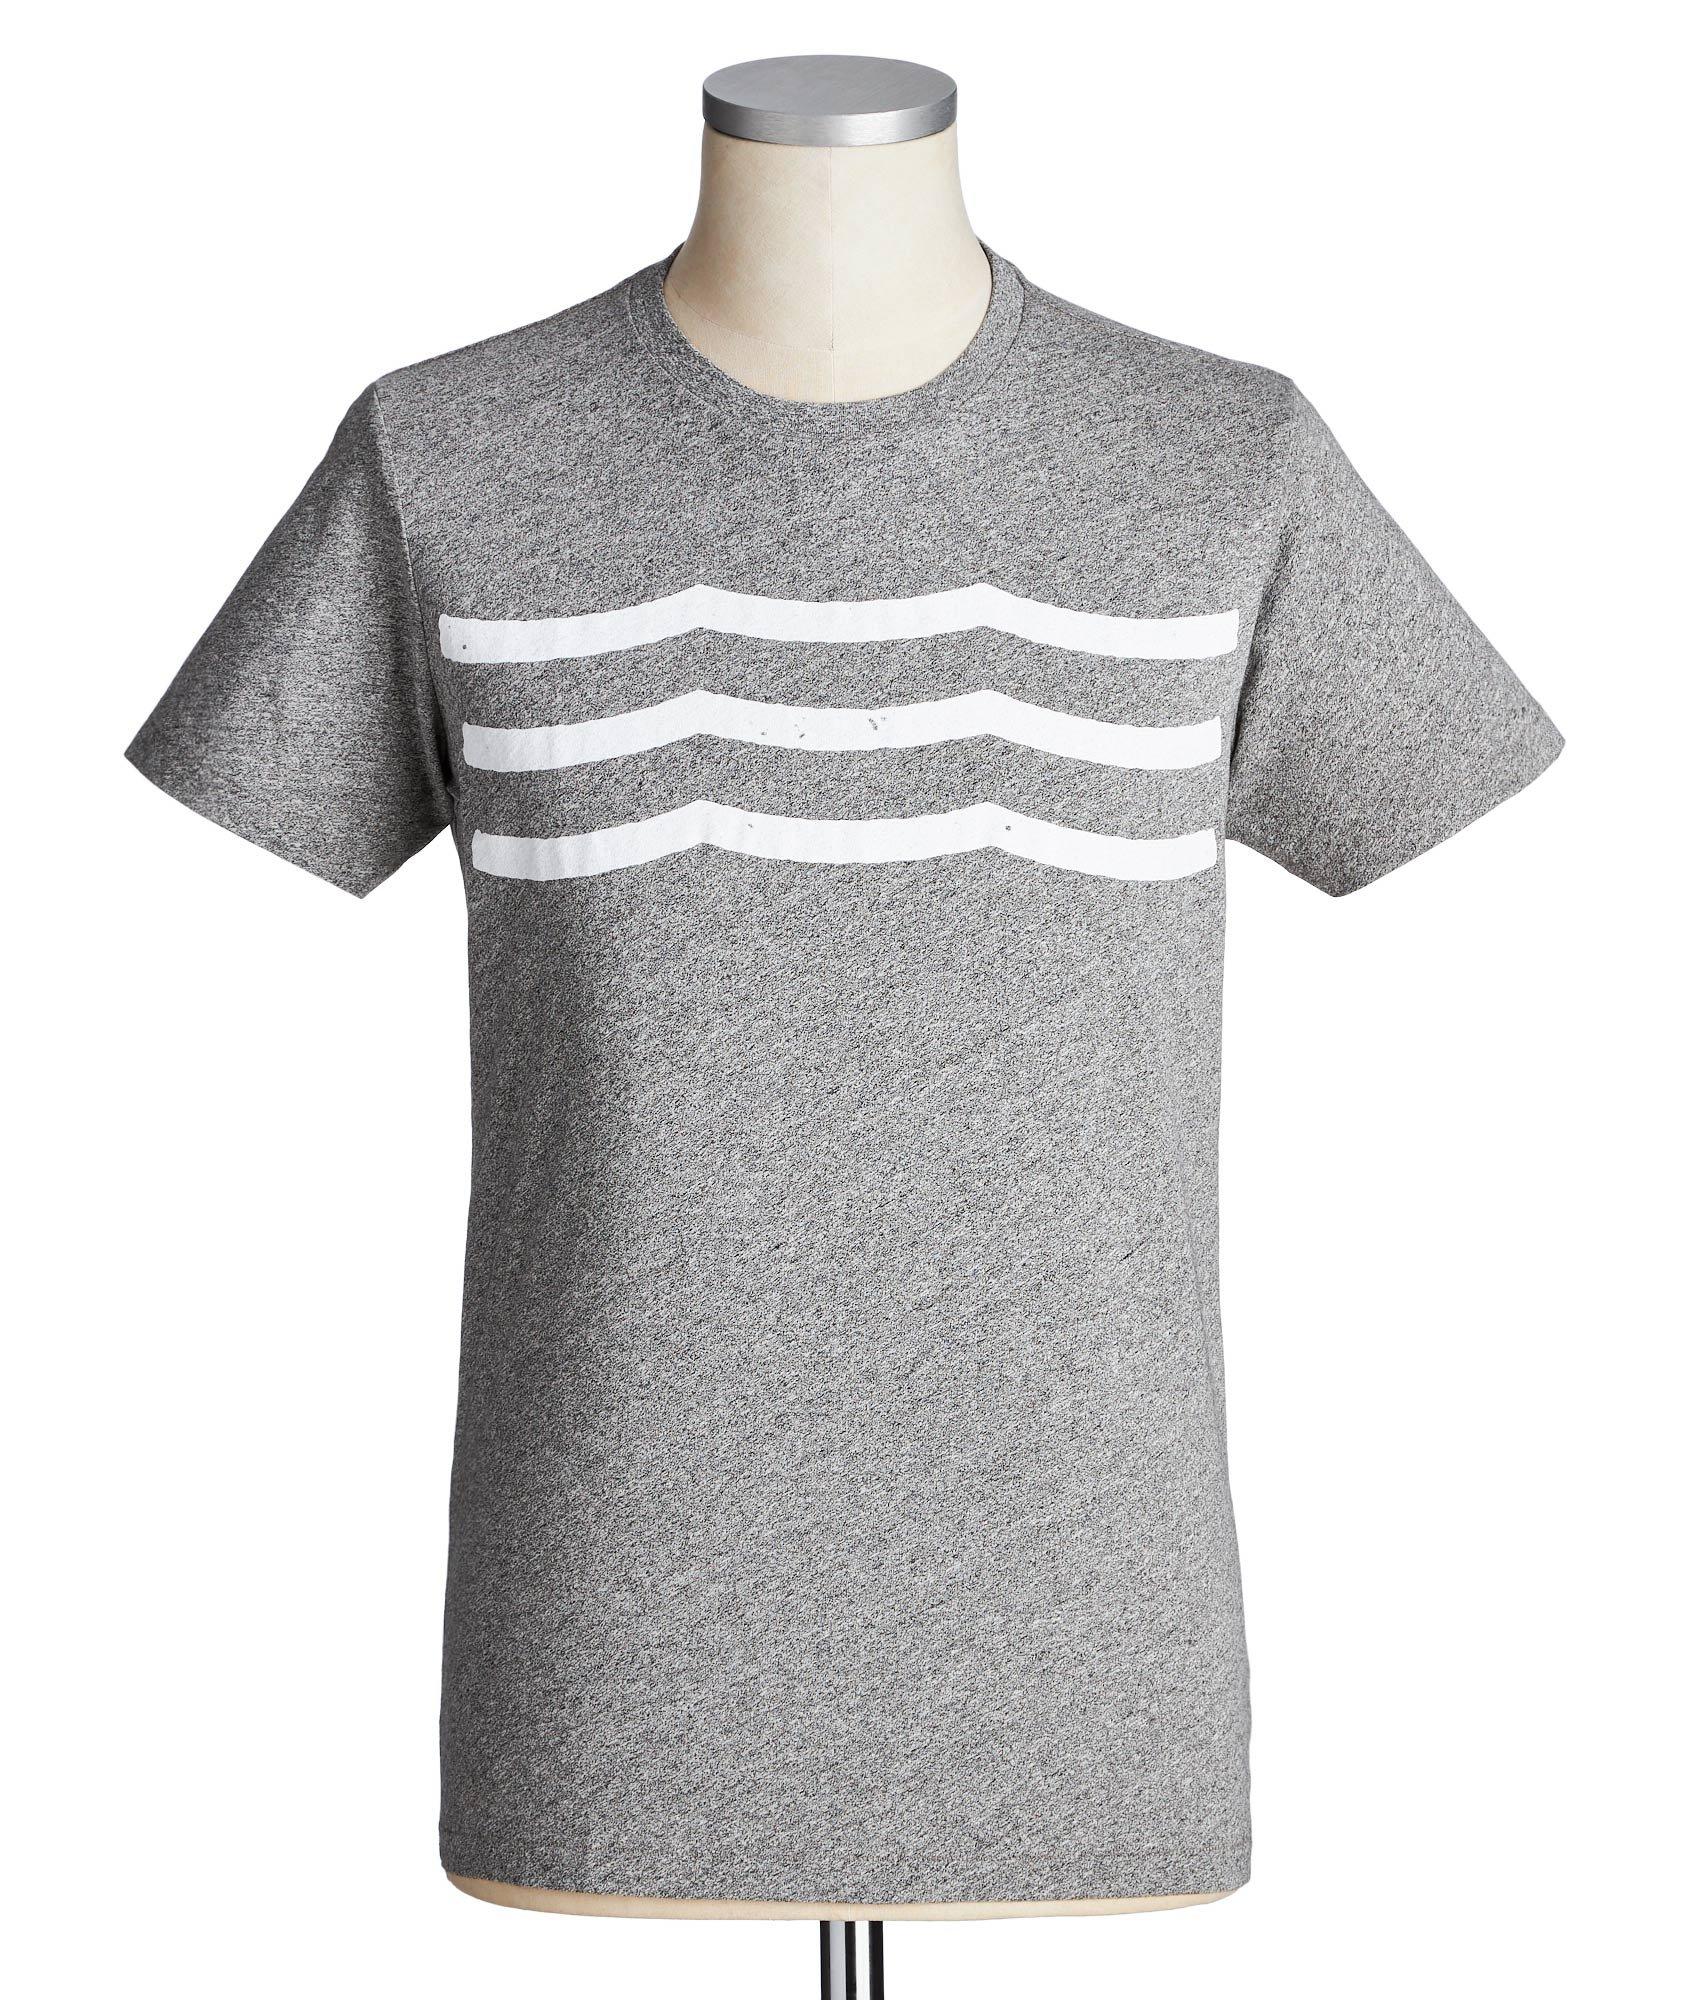 Printed Cotton-Blend T-Shirt image 0